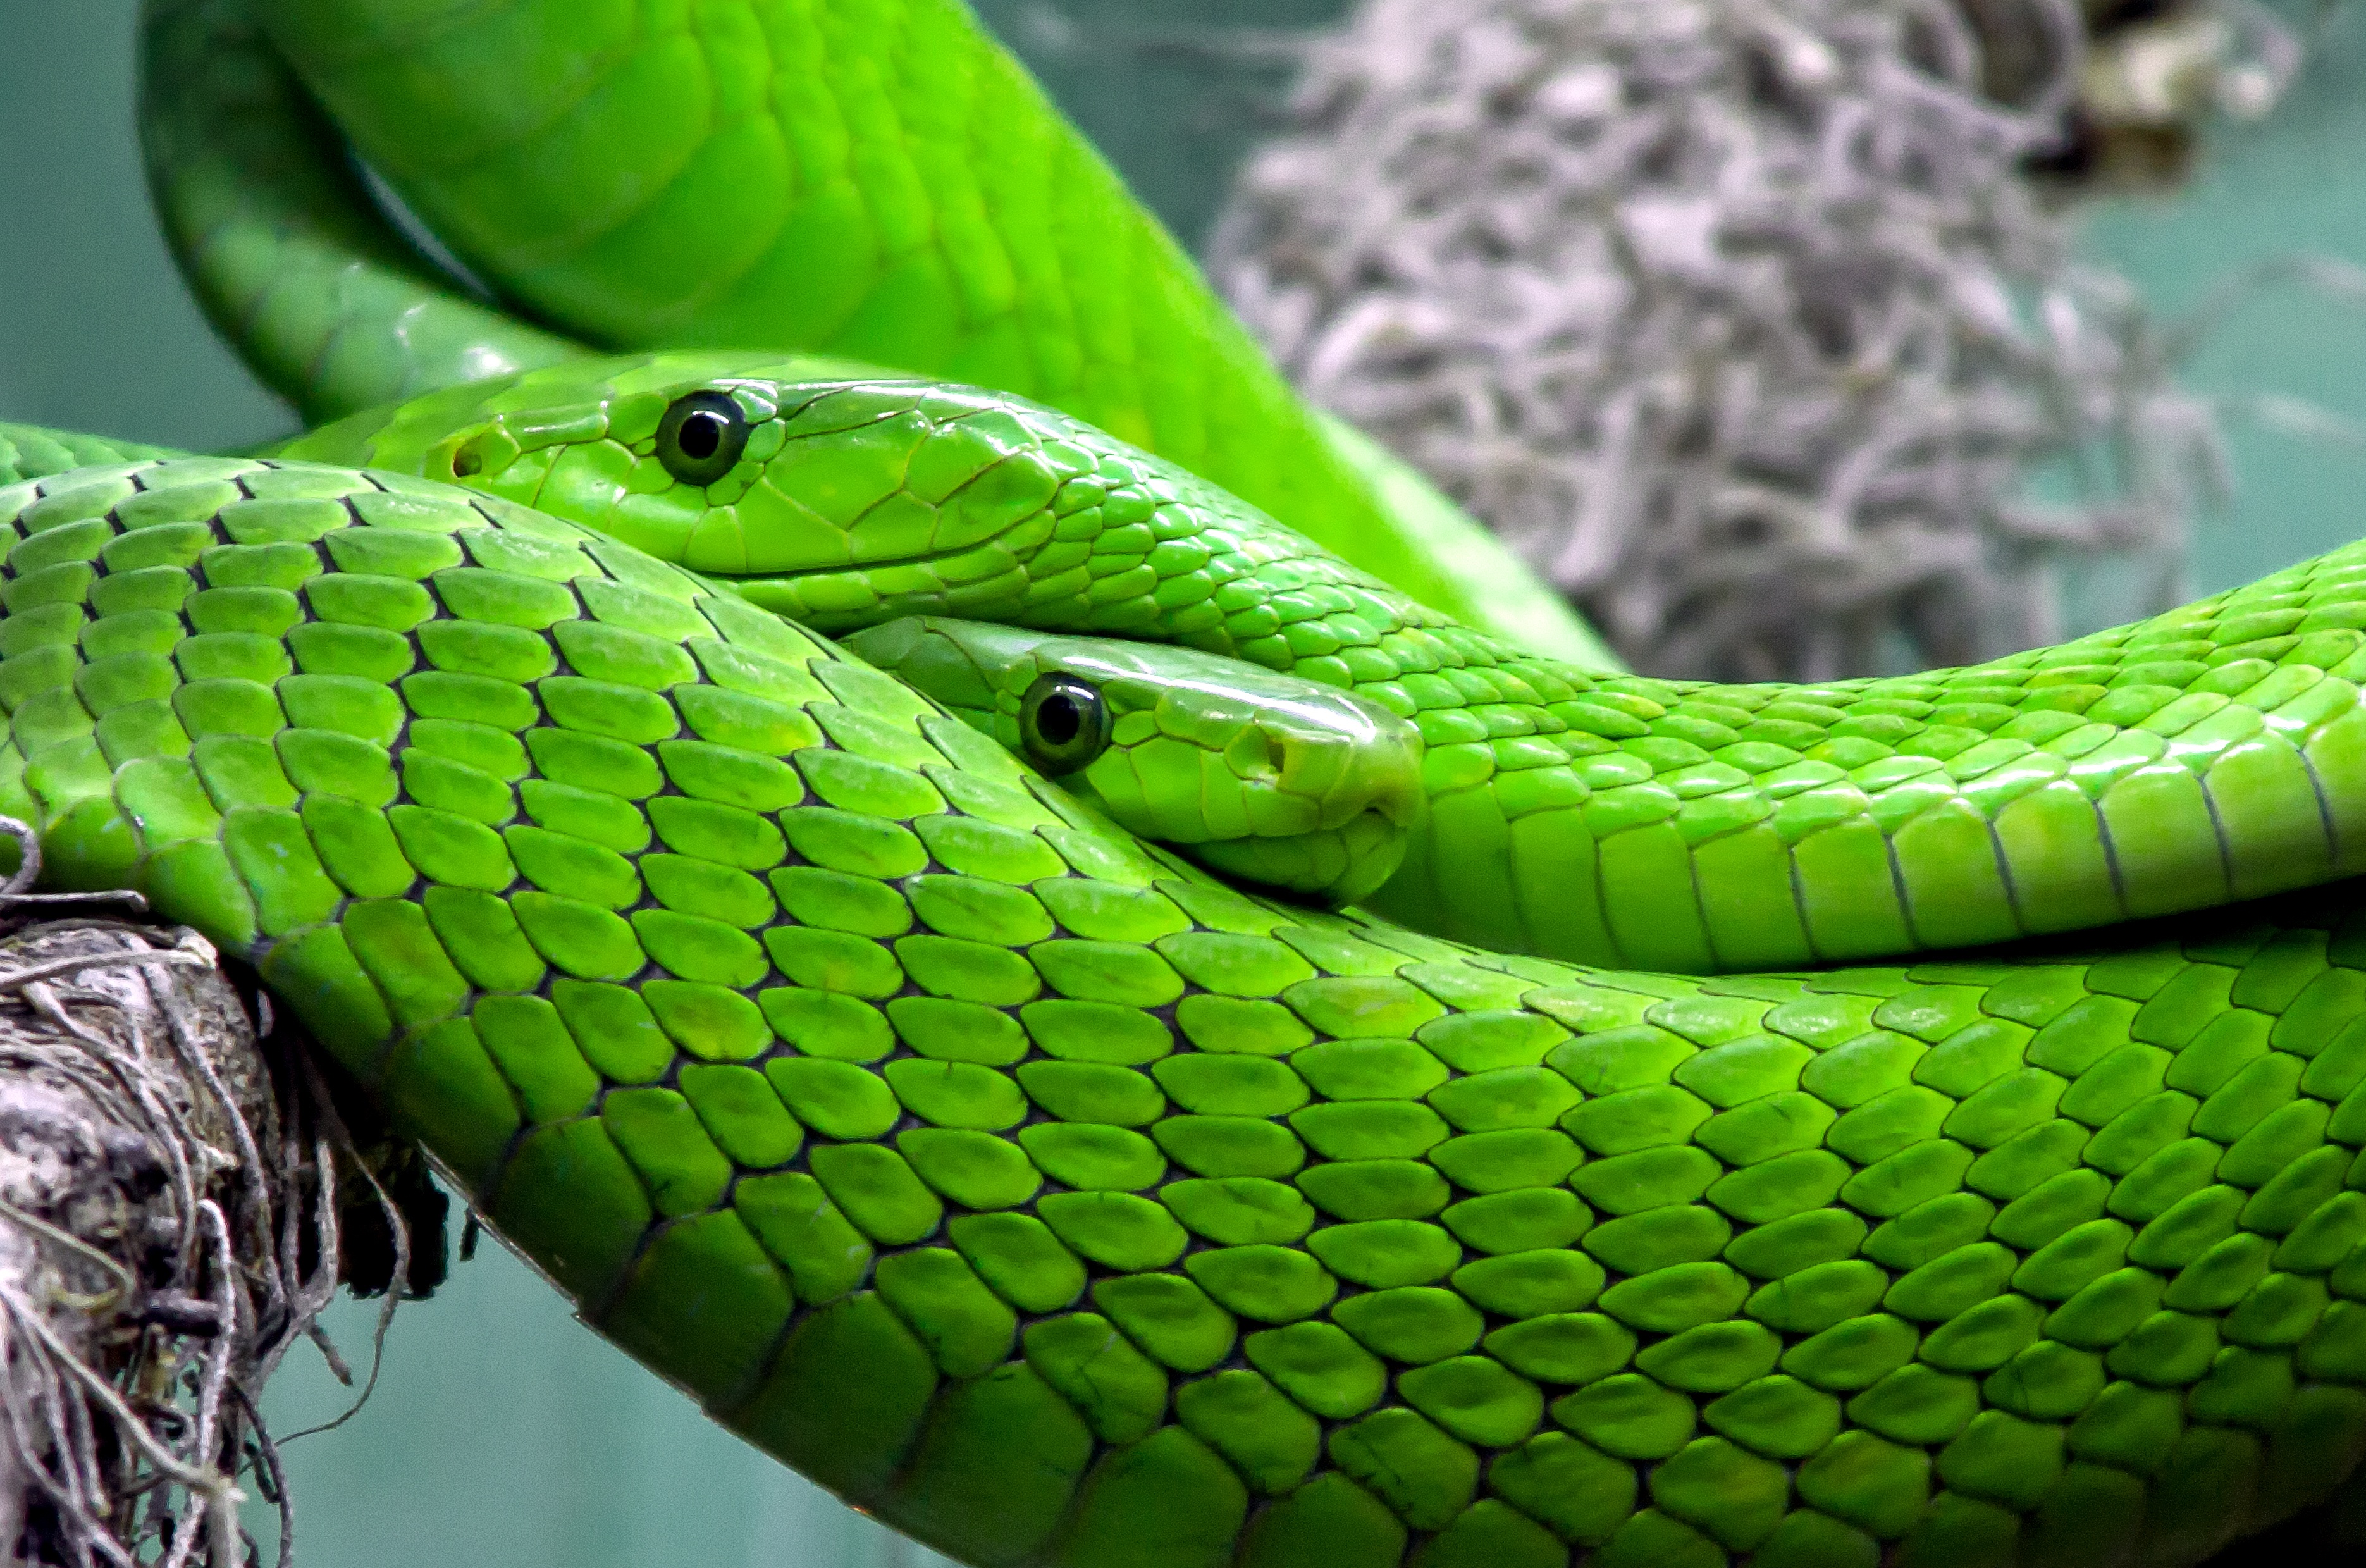 Wallpapers green snake reptile wildlife on the desktop